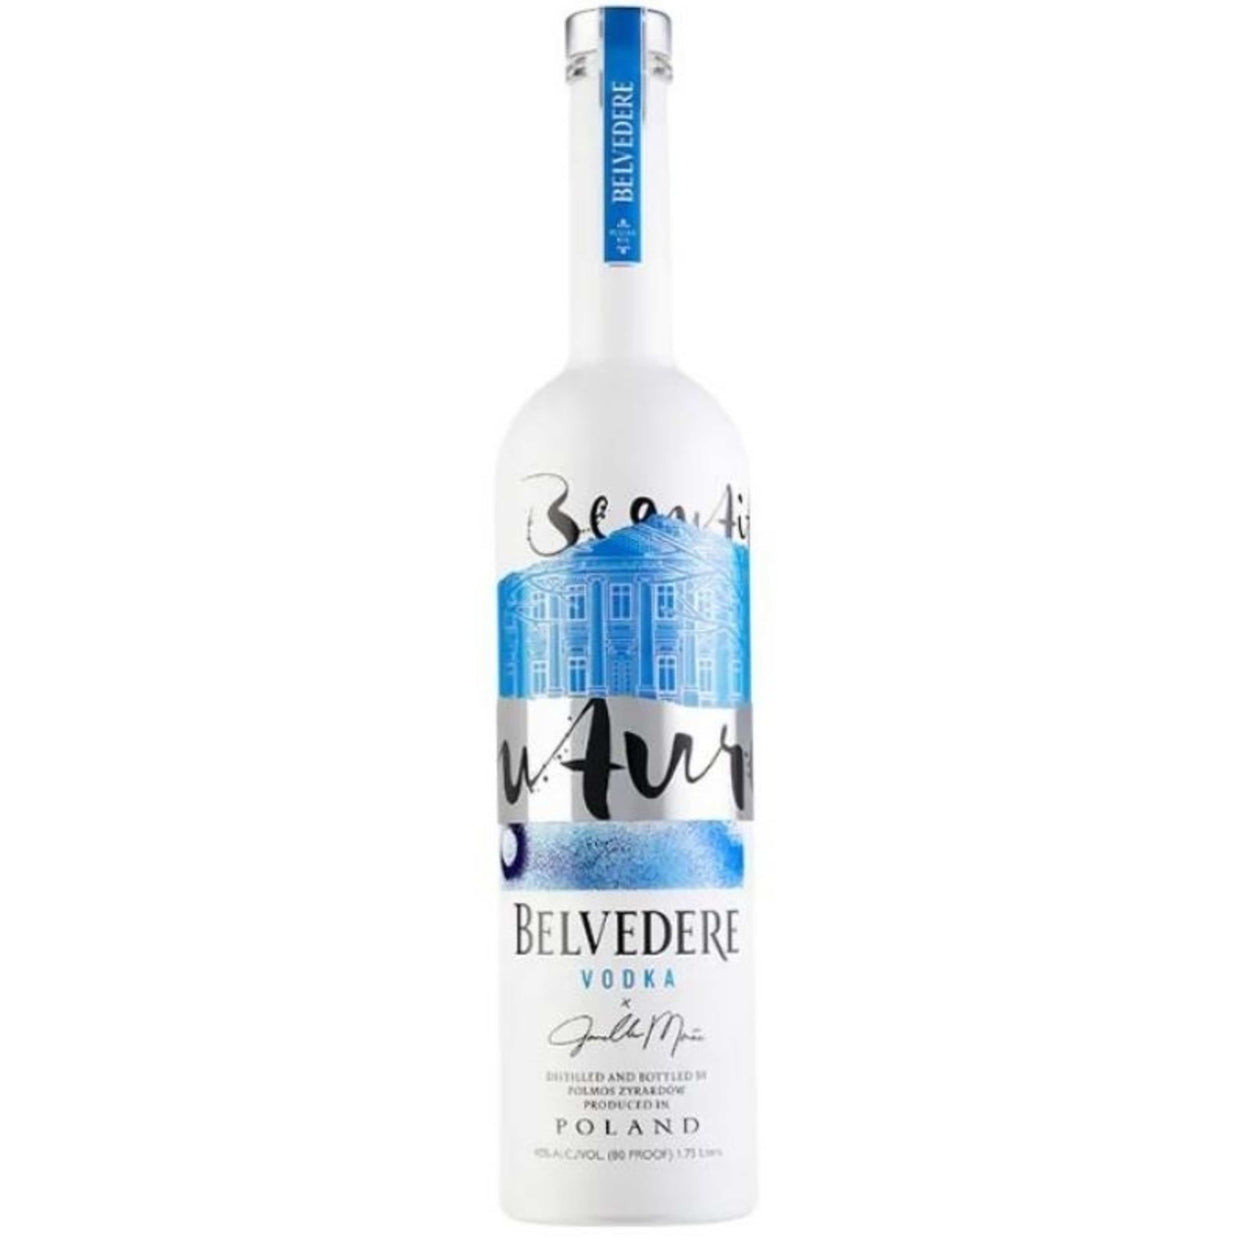 Buy Belvedere Vodka by Janelle Monae